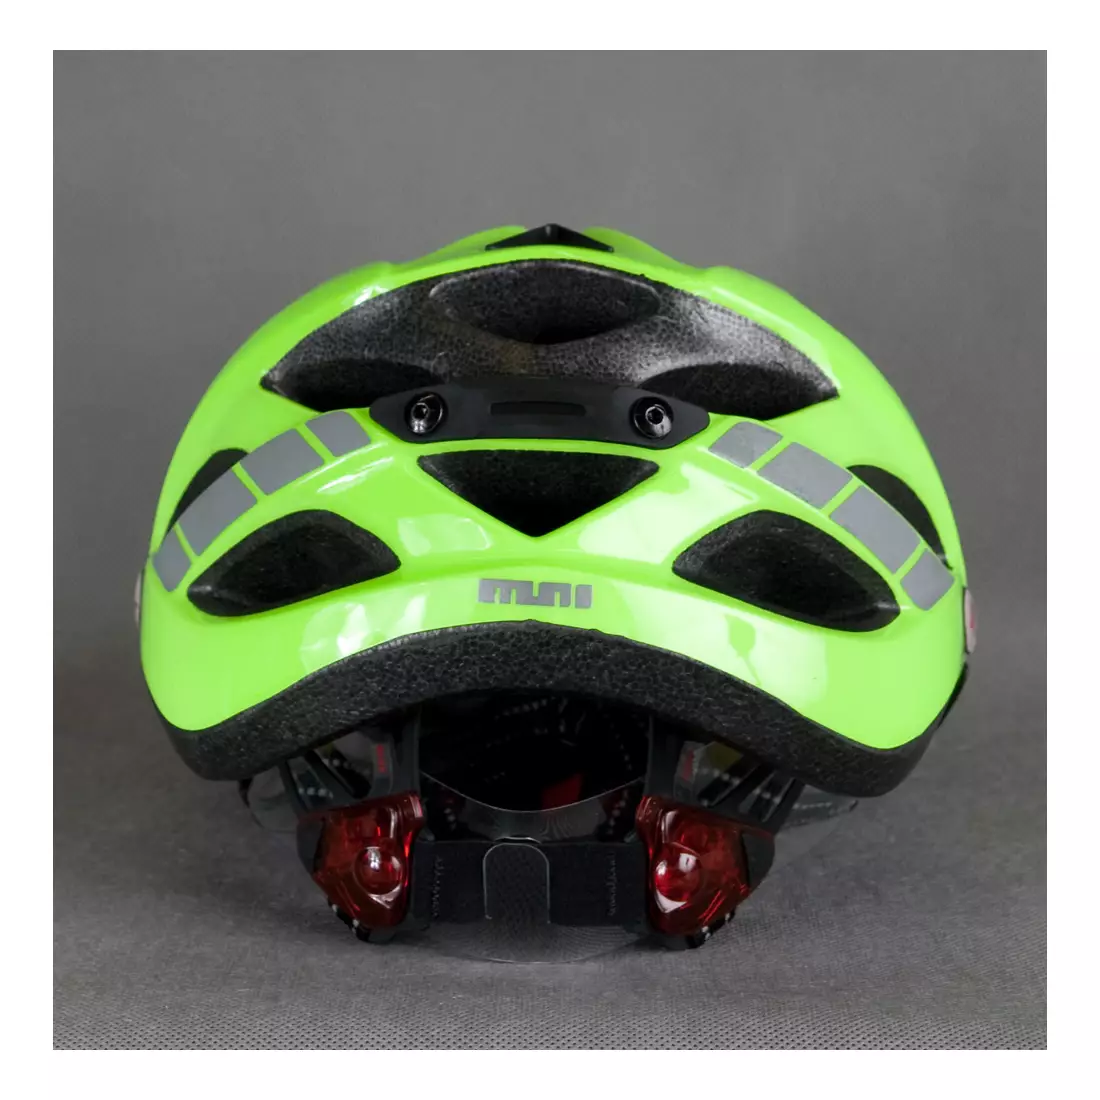 BELL - MUNI bicycle helmet, color: Fluor